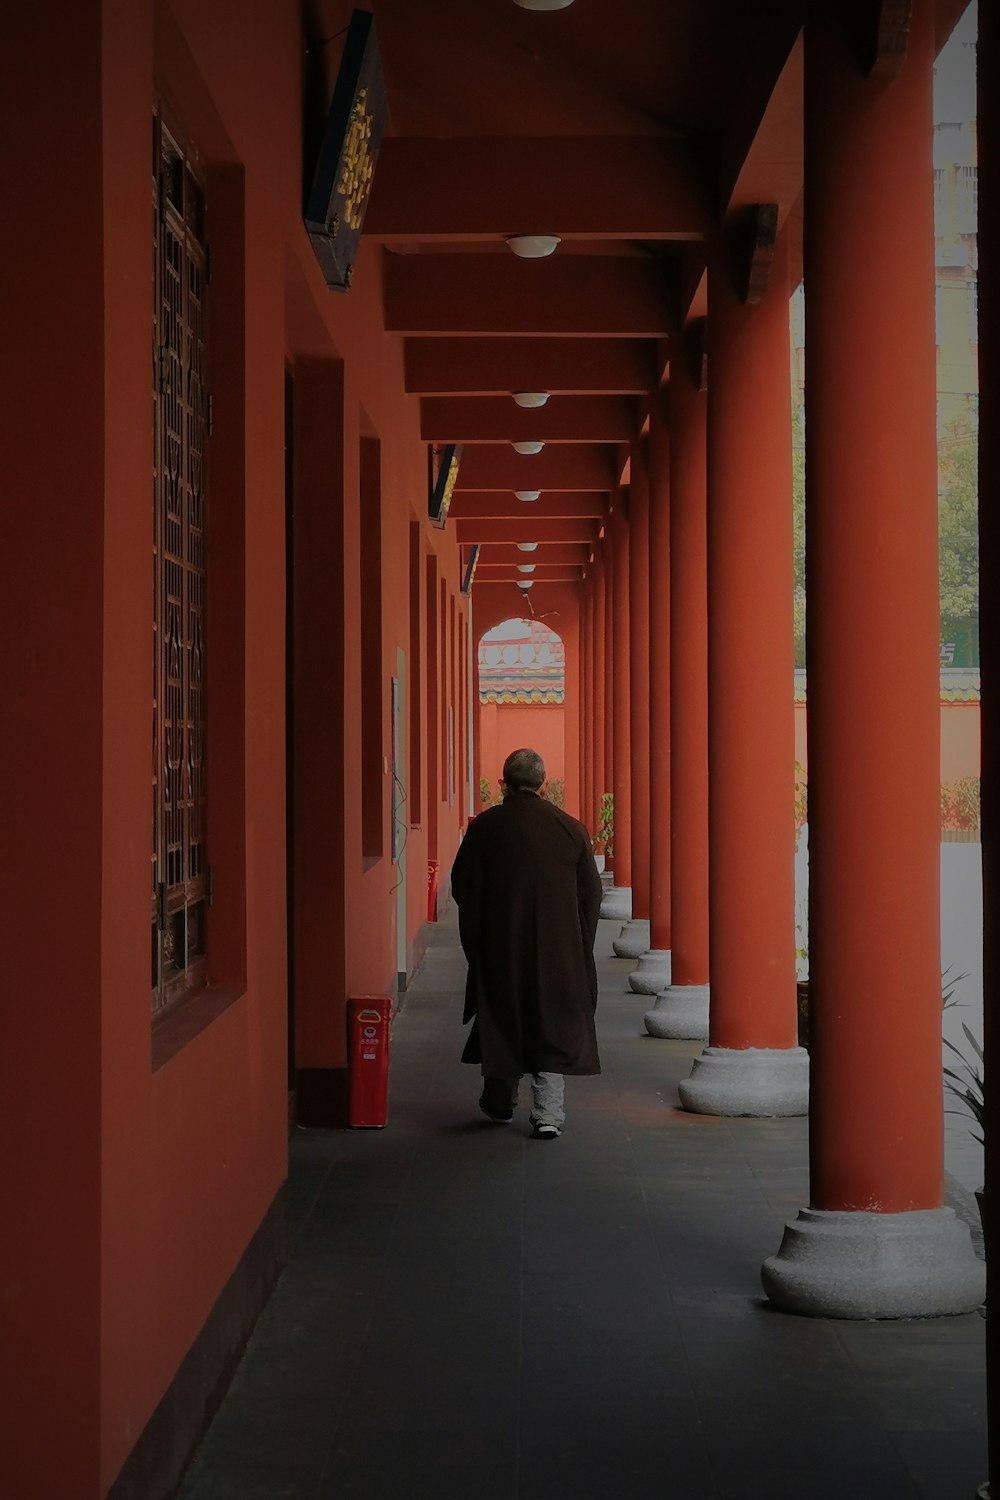 man in black coat walking on hallway